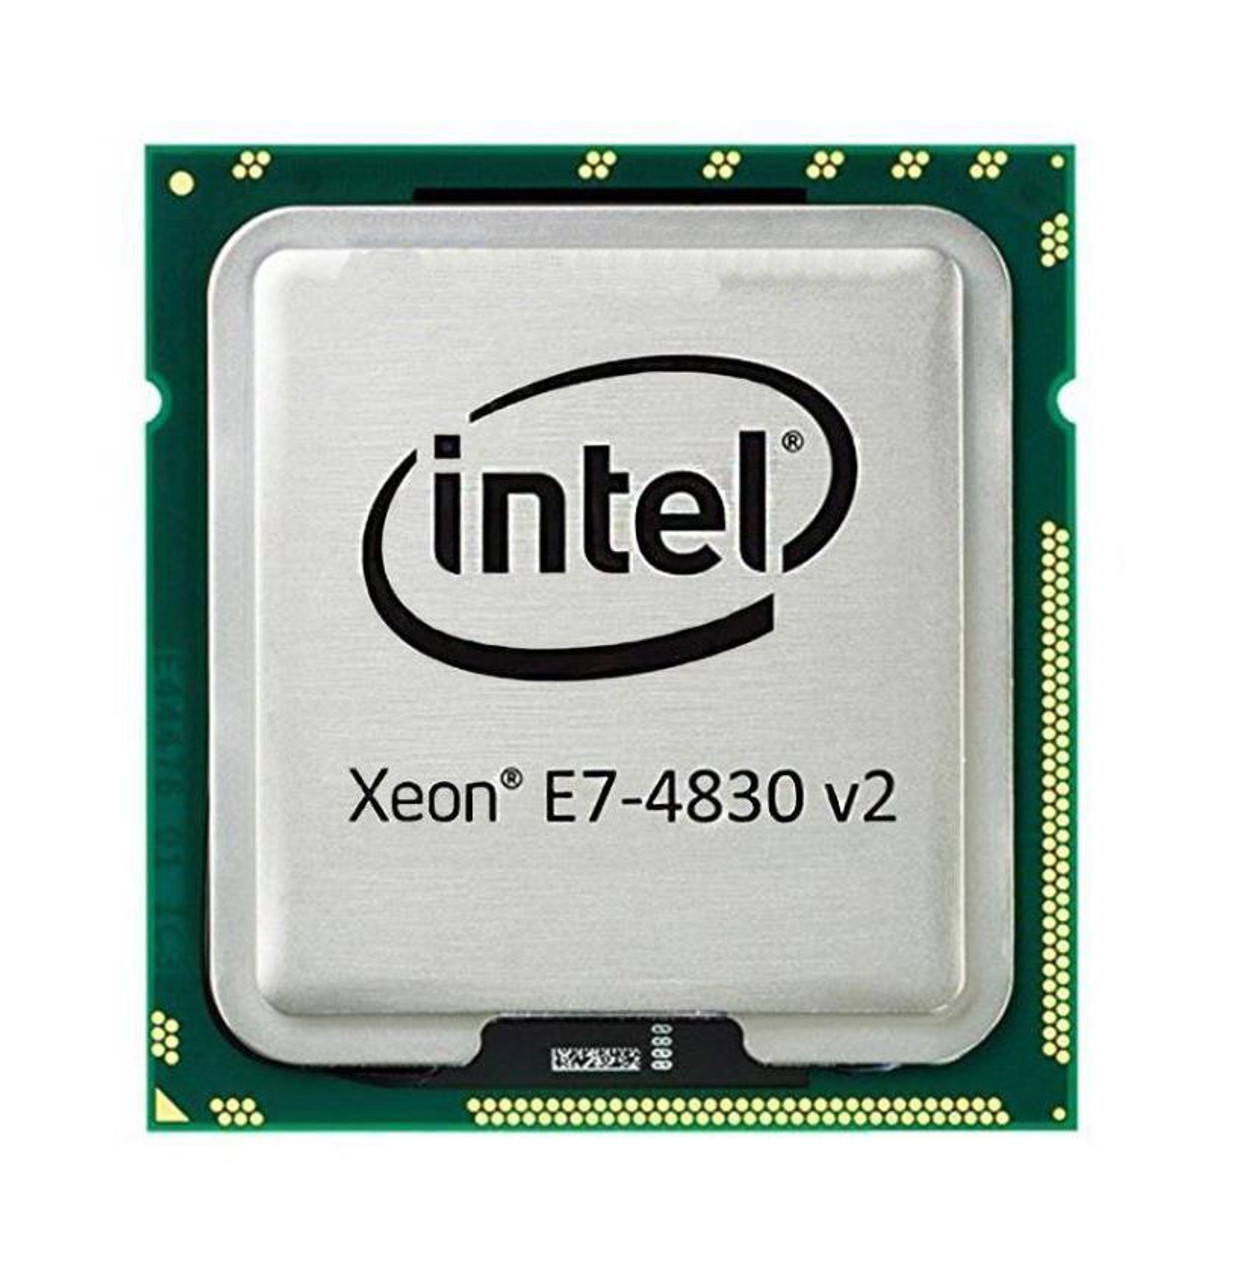 Lenovo 2.20GHz 7.20GT/s QPI 20MB L3 Cache Socket FCLGA2011 Intel Xeon E7-4830 v2 10-Core Processor Upgrade